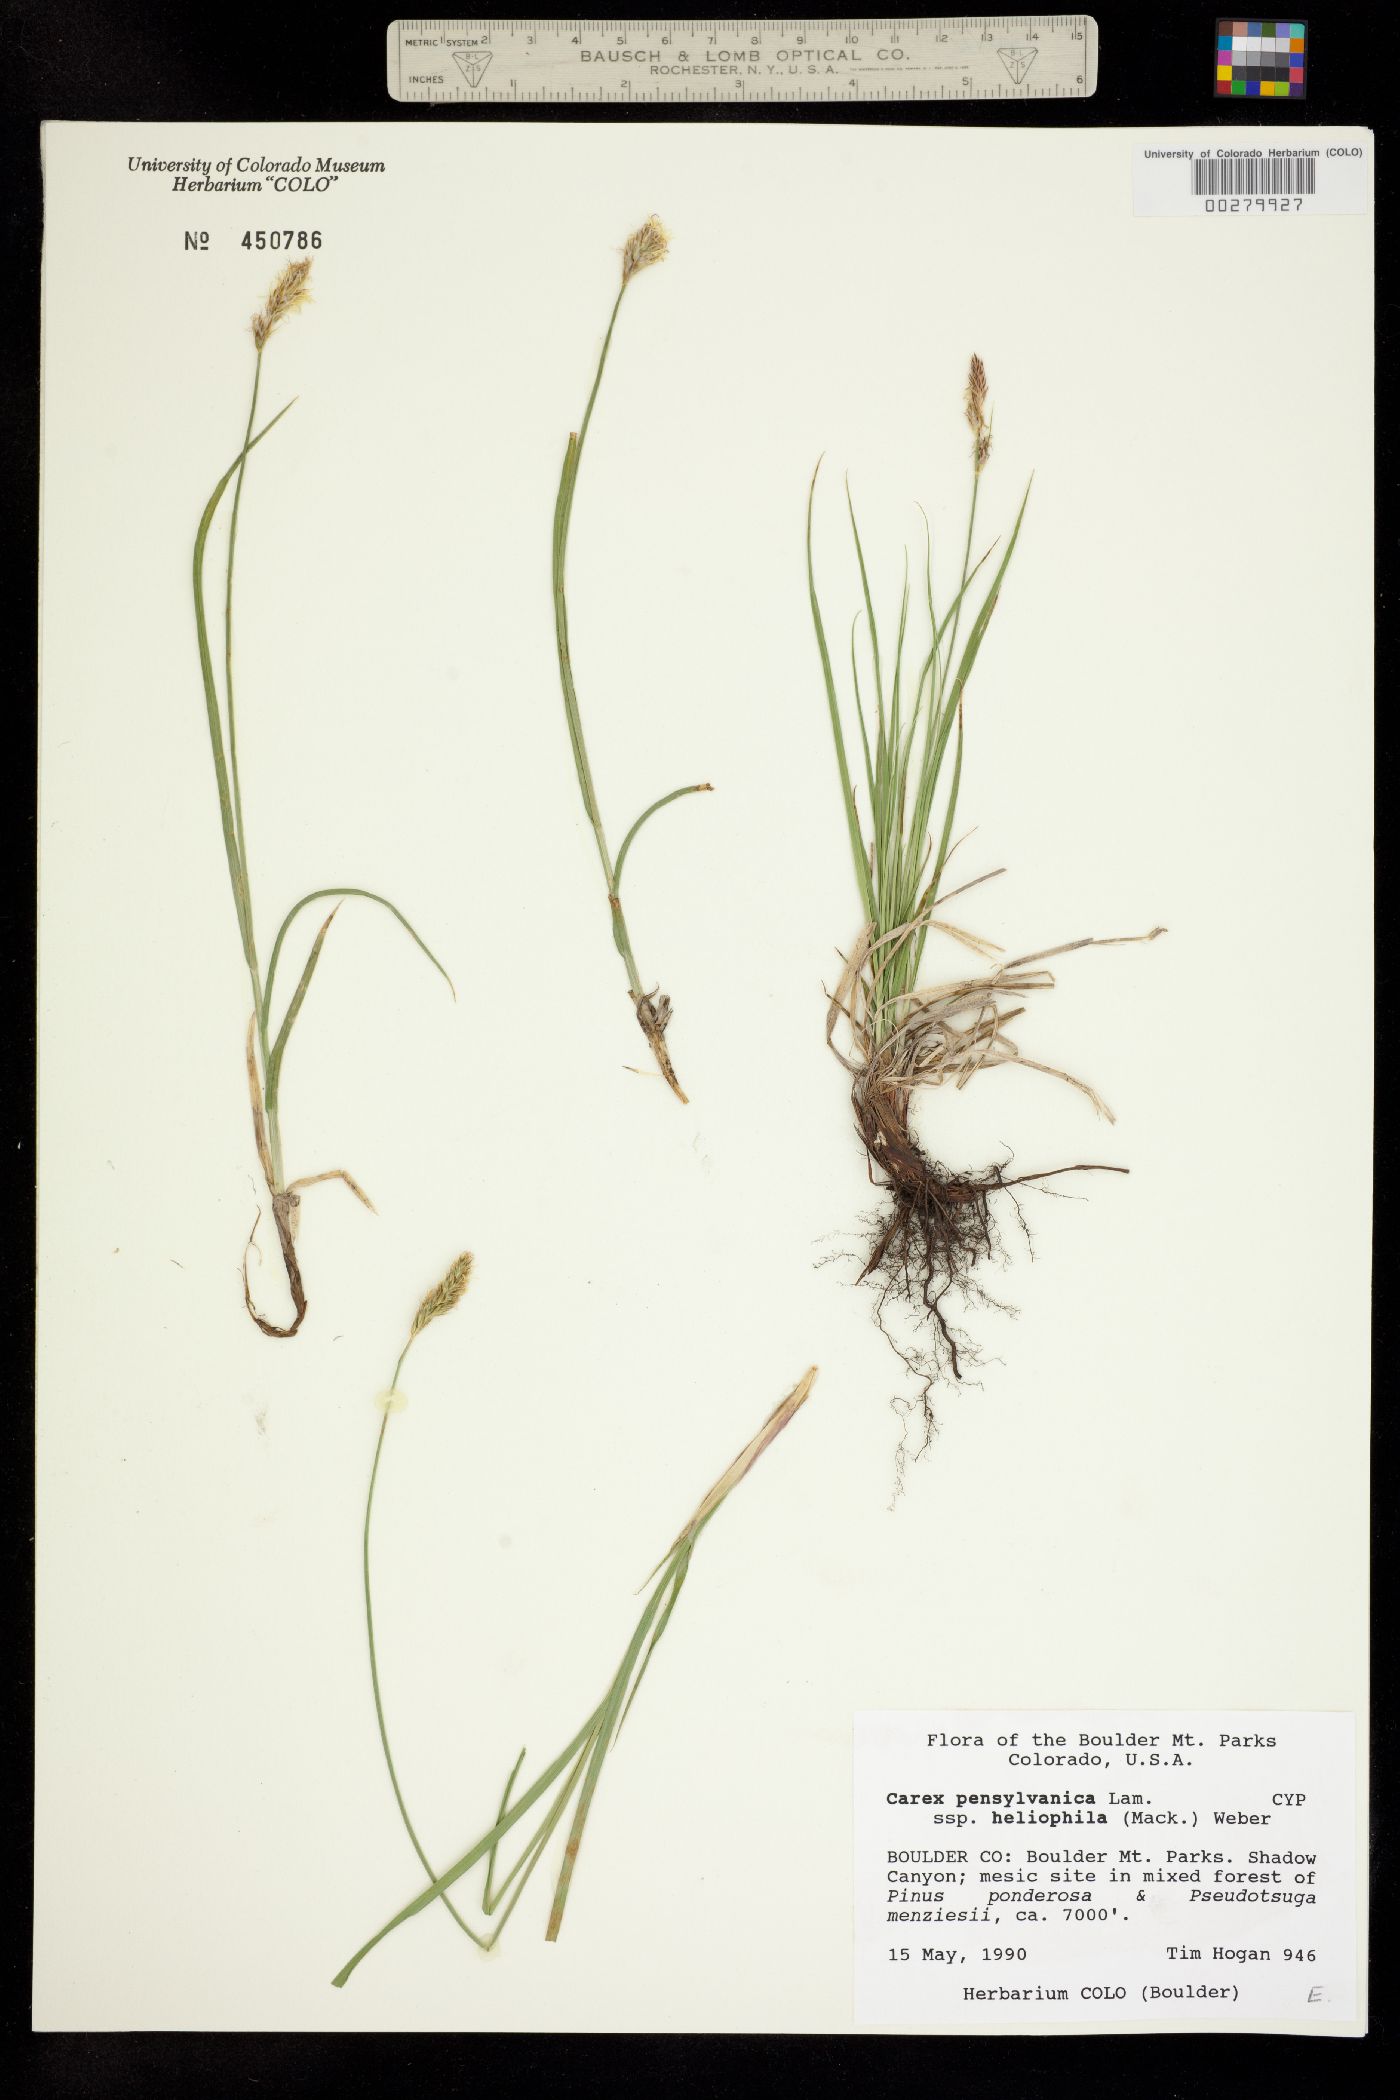 Carex inops ssp. heliophila image